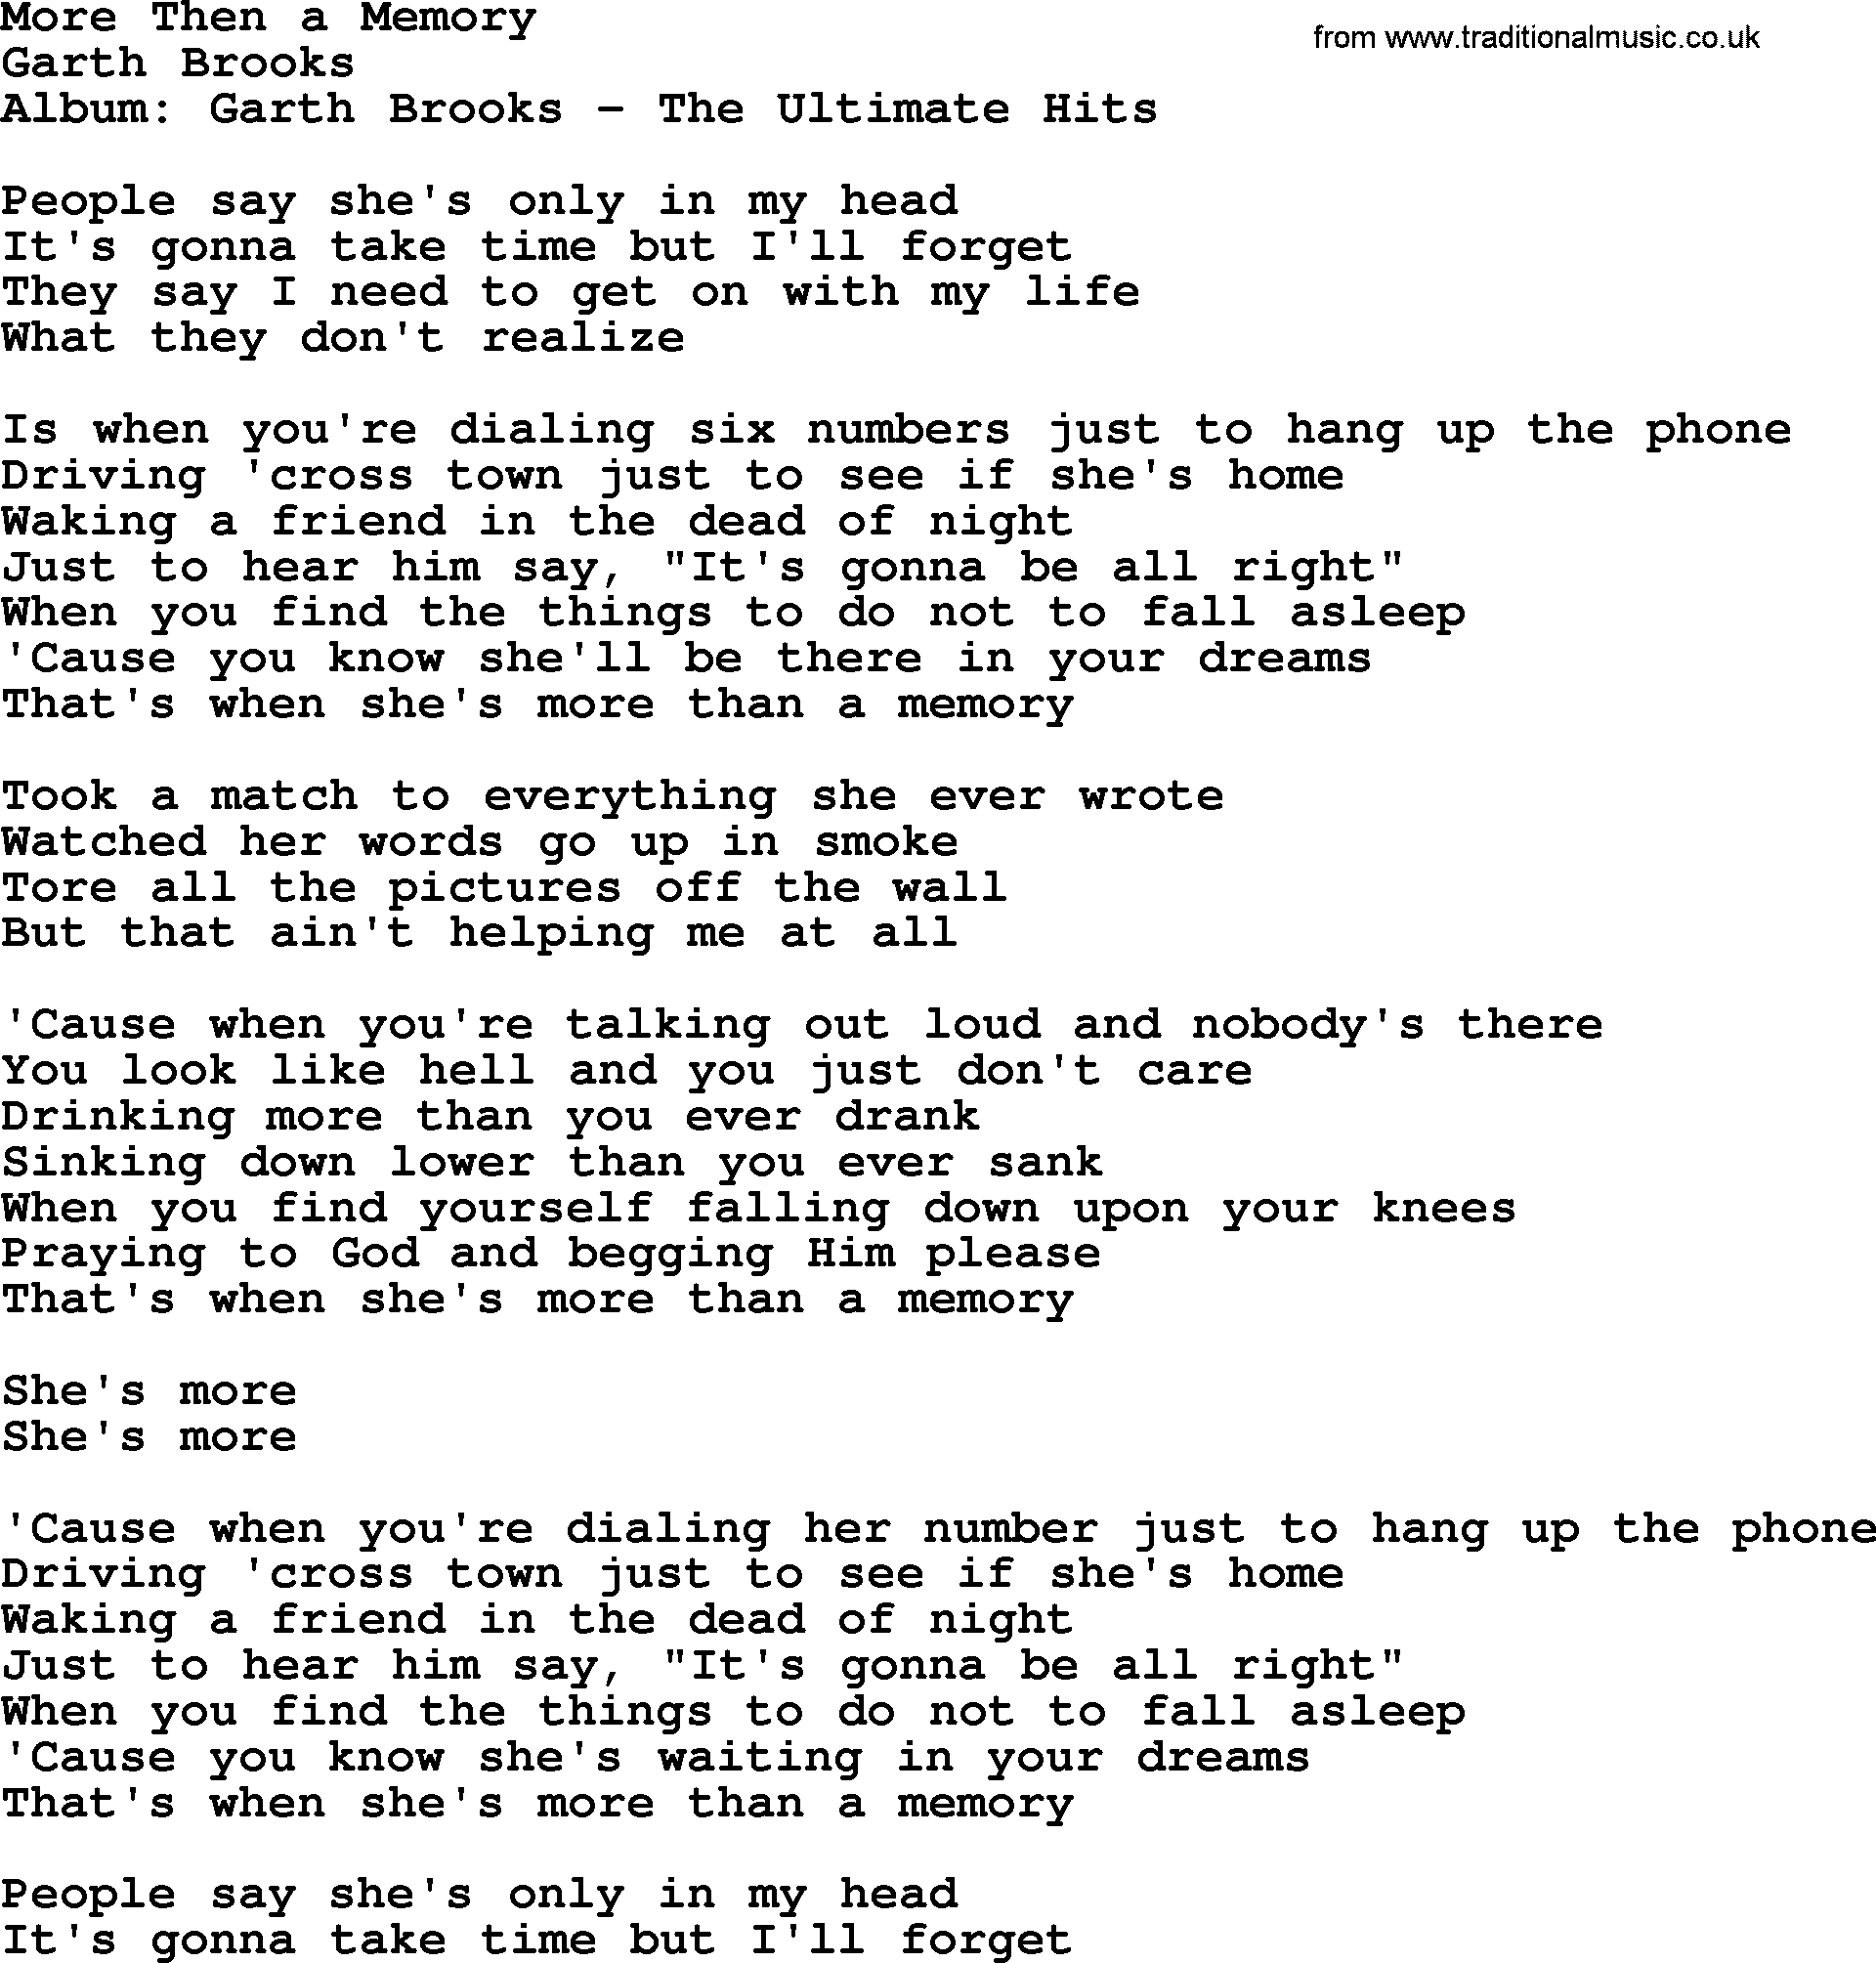 Garth Brooks song: More Than A Memory, lyrics